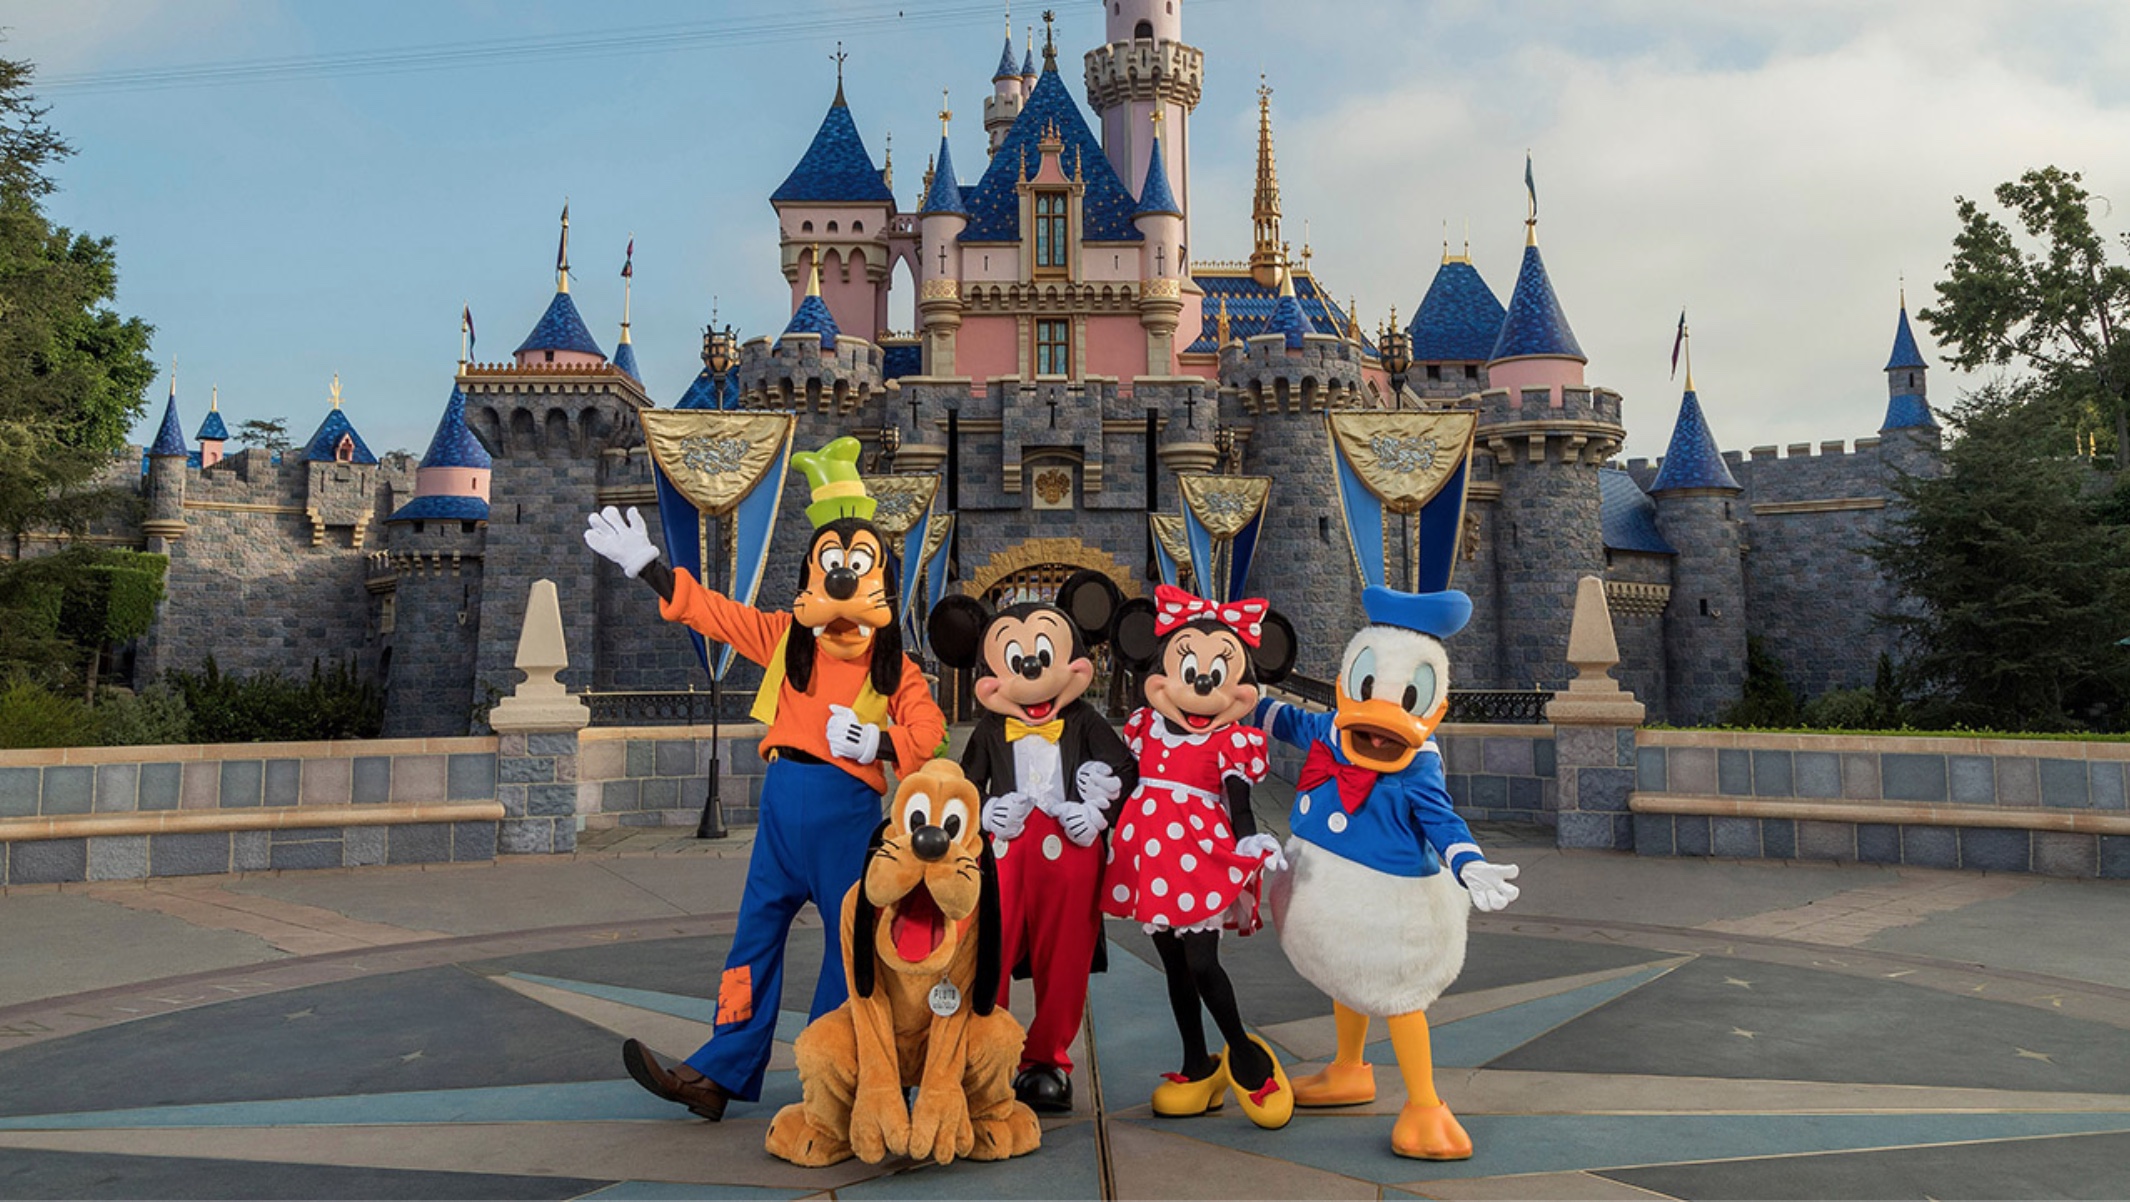 Photo of Disney characters in front of Disneyland castle. Credit - Joshua Sudock | Disneyland Resorts, Disney Enterprises, Inc.